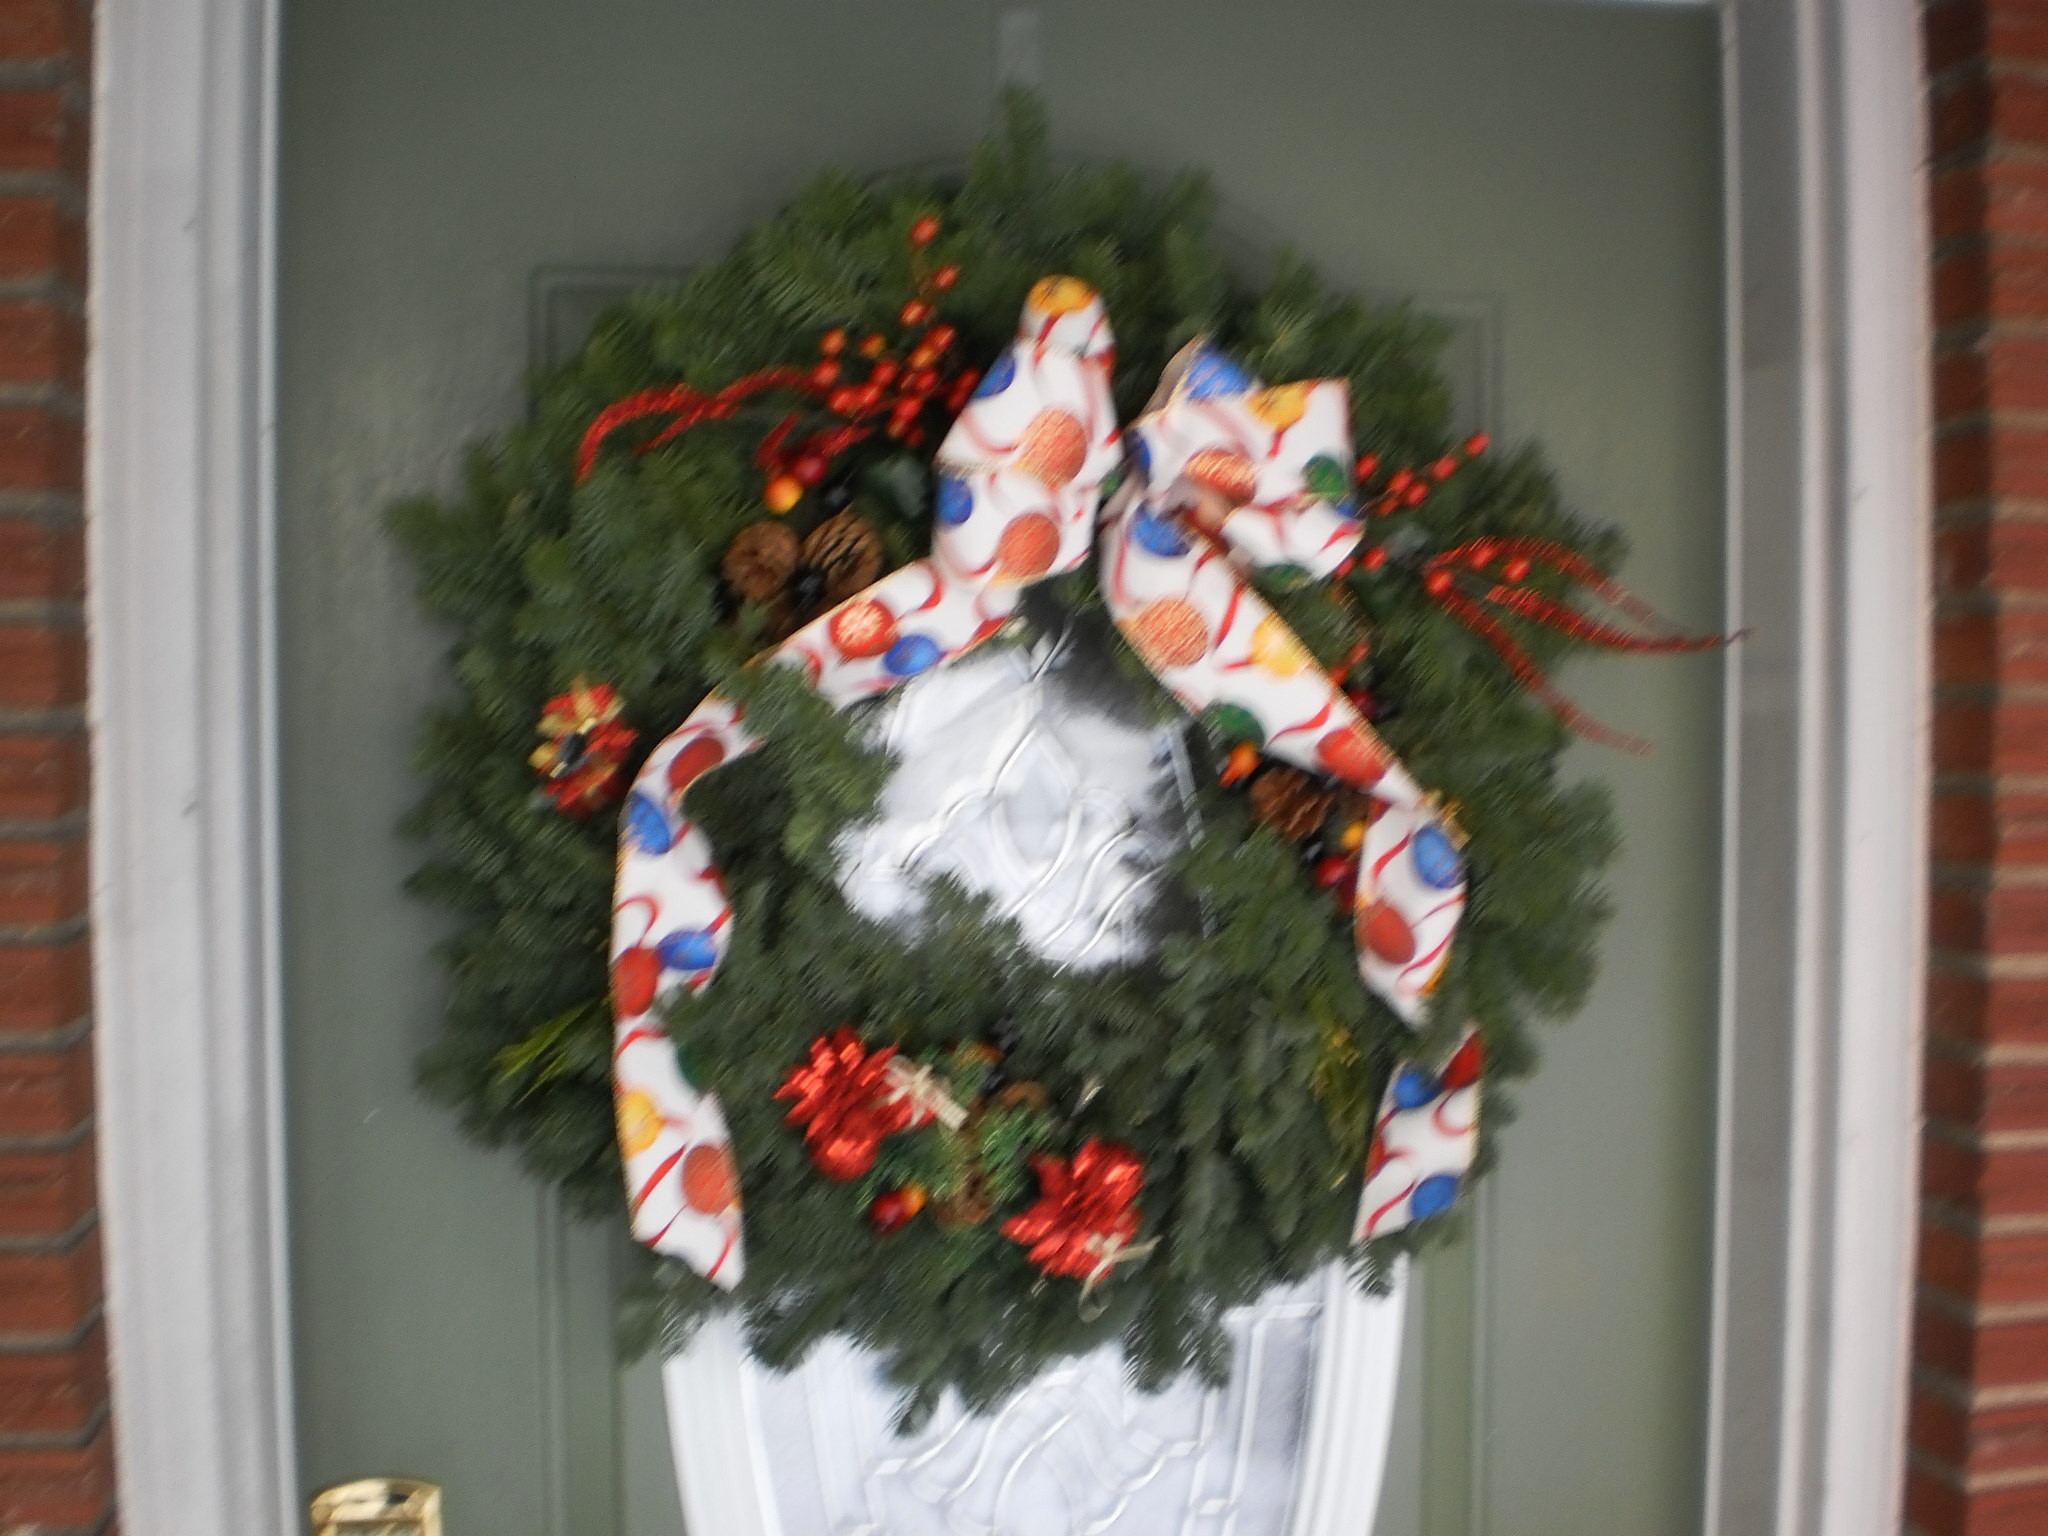 Sample wreath